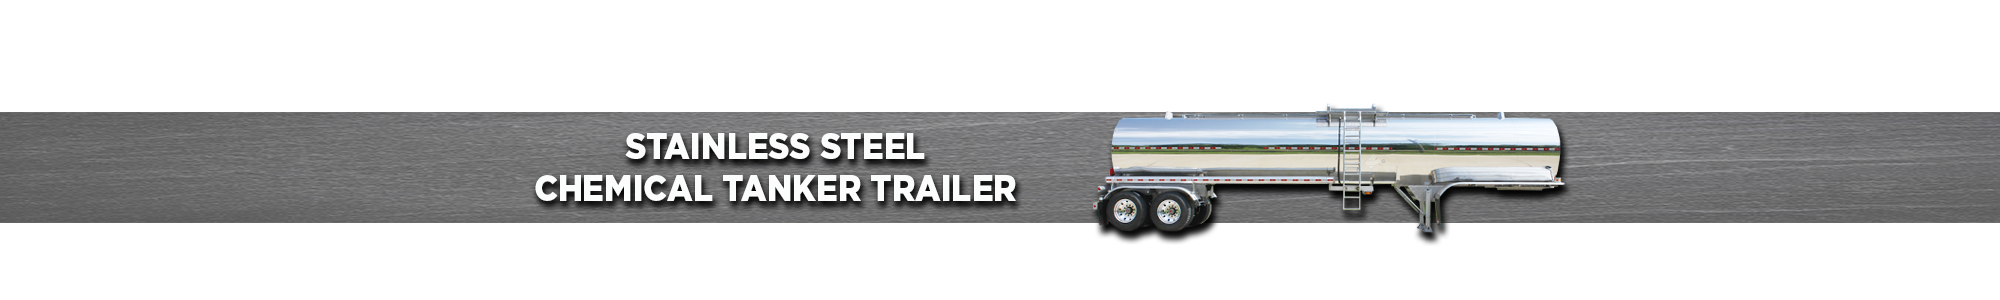 Stainless Steel Chemical Tanker Trailer